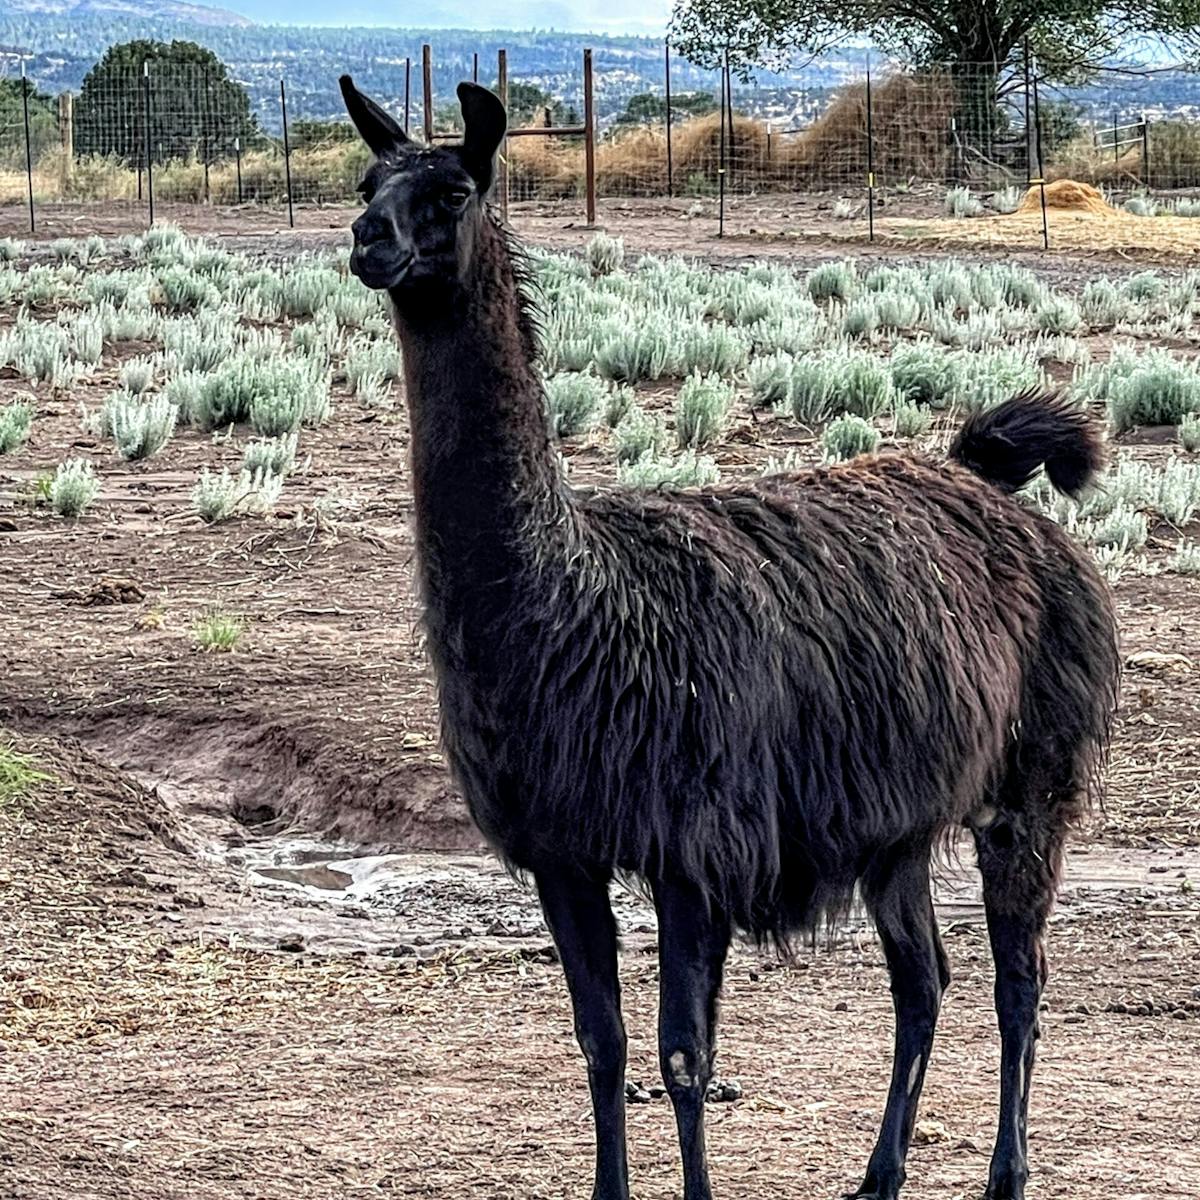 a llama in a dirt field